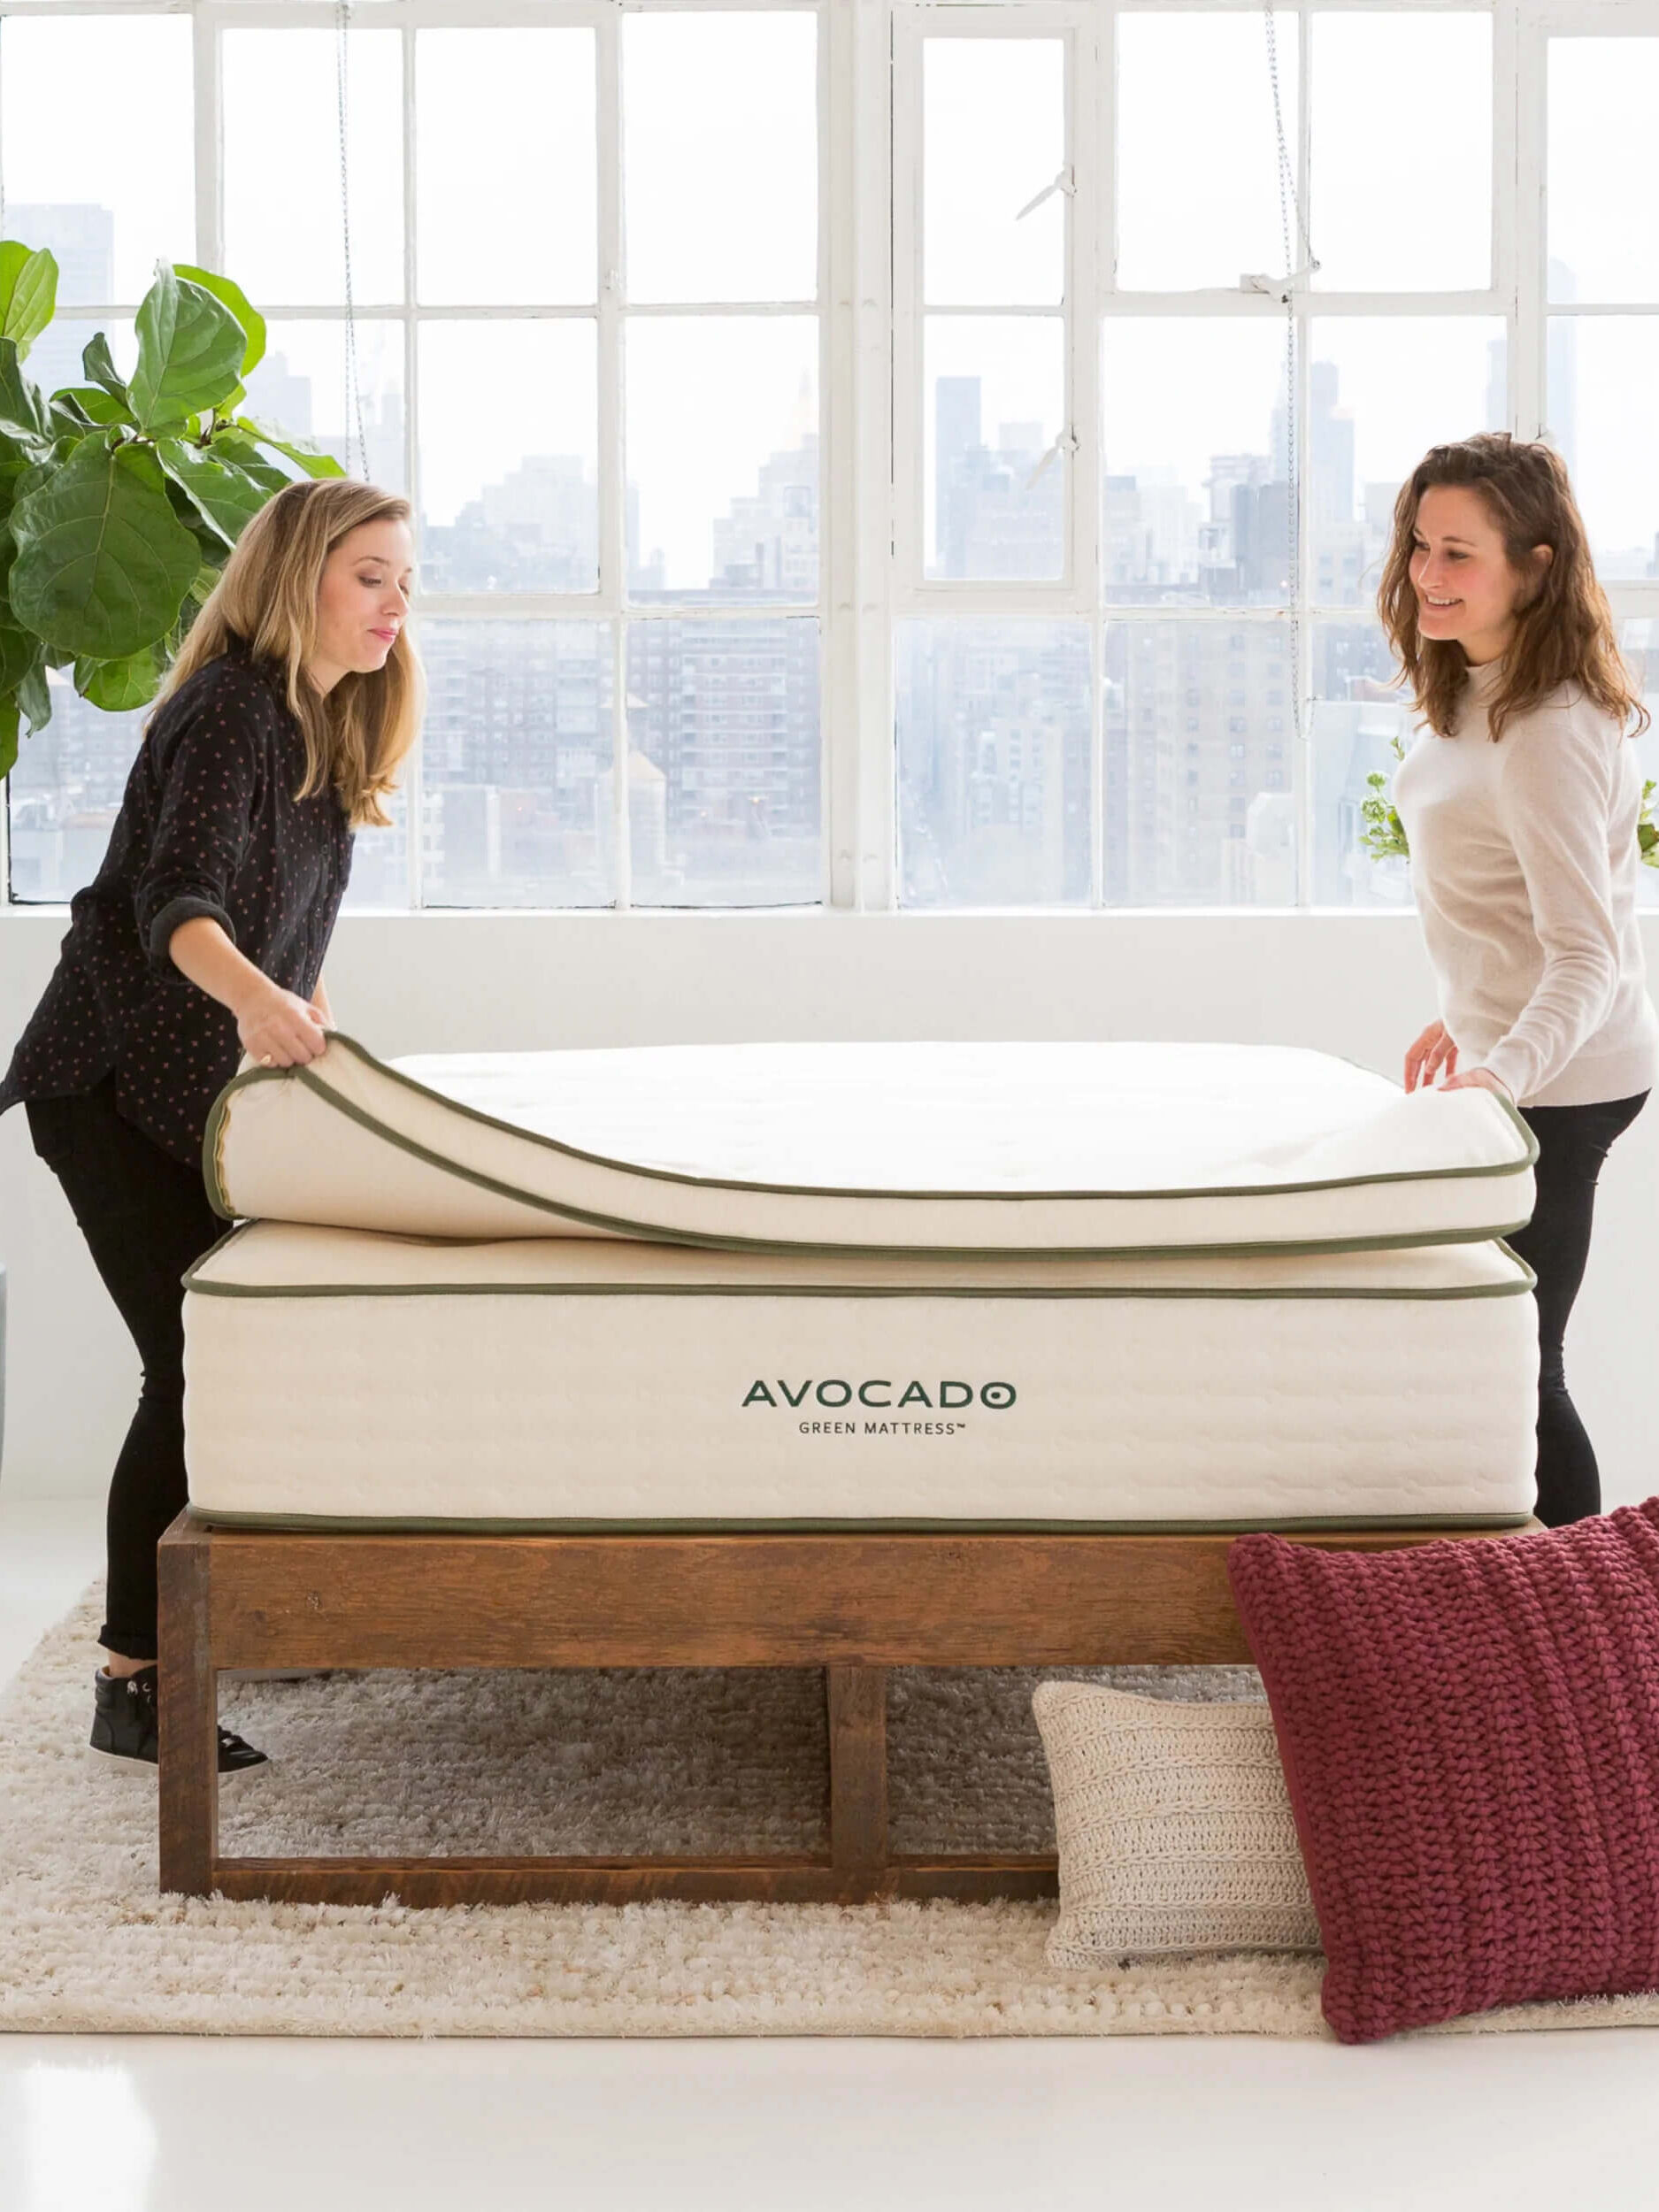 Two models place an Avocado organic mattress topper on top of a mattress.